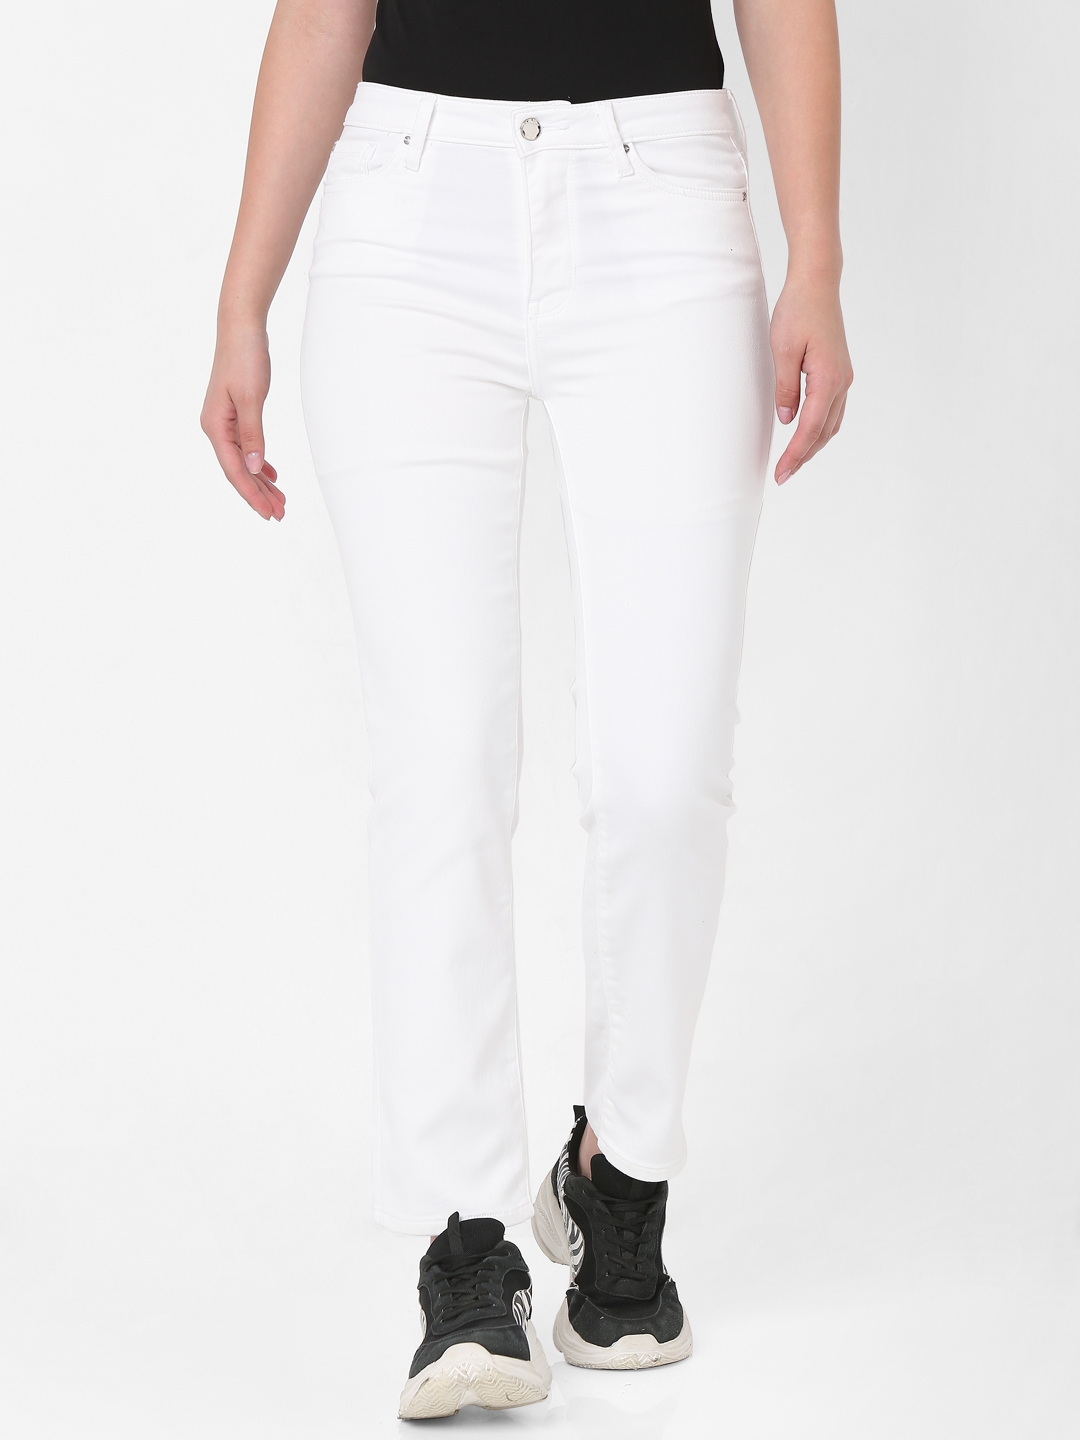 spykar | Women's White Cotton Solid Slim Jeans 0